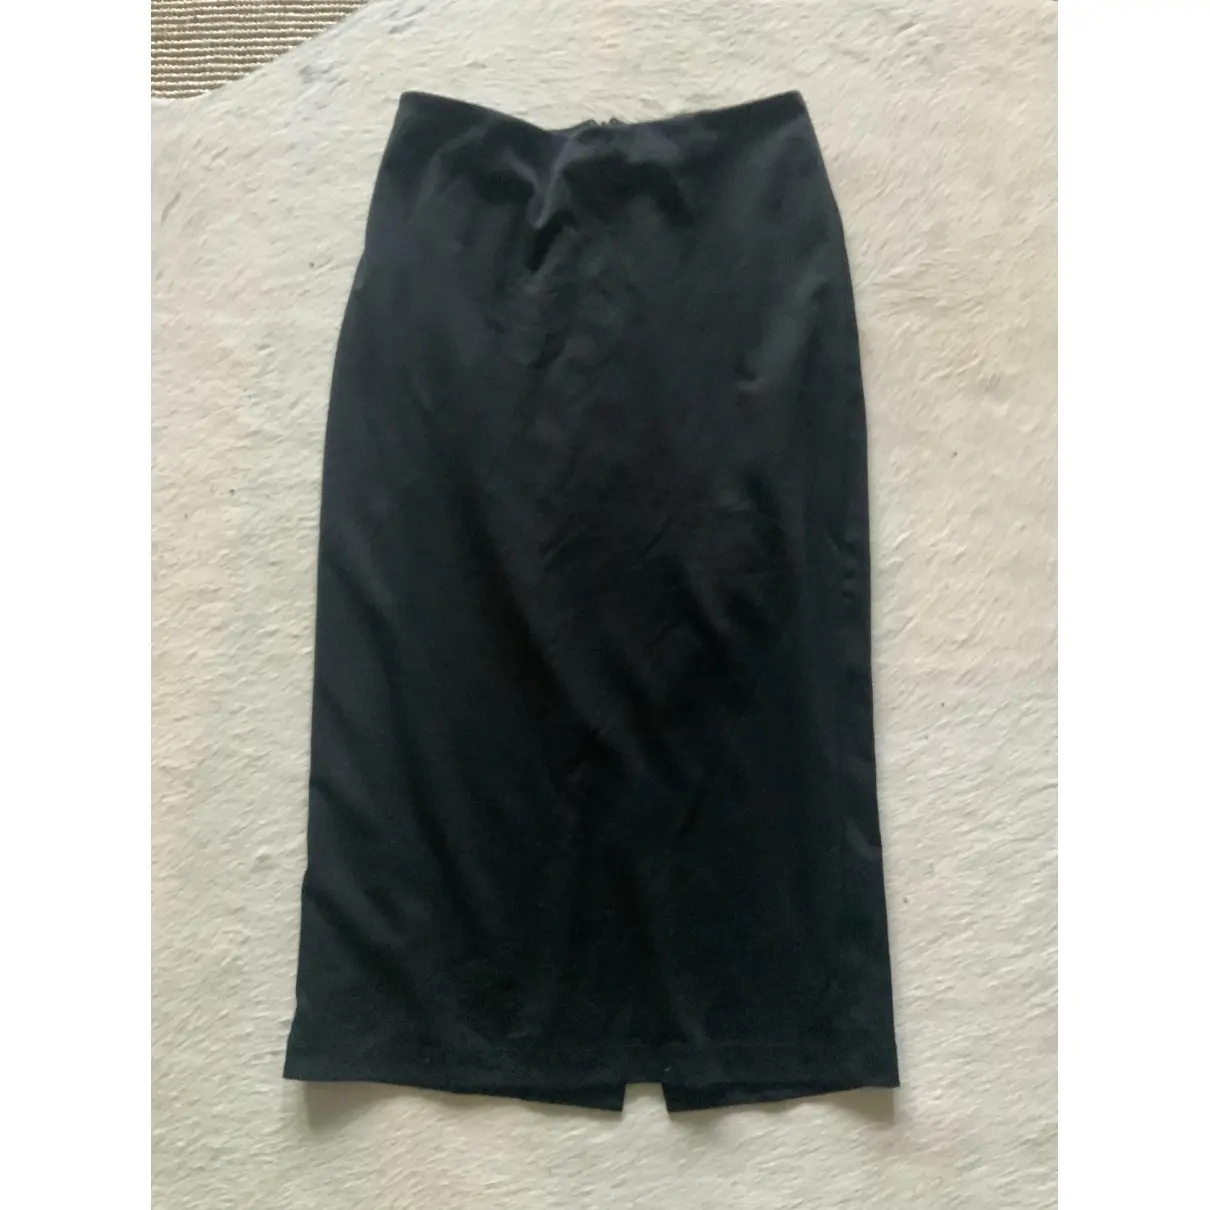 Buy T by Alexander Wang Mid-length skirt online